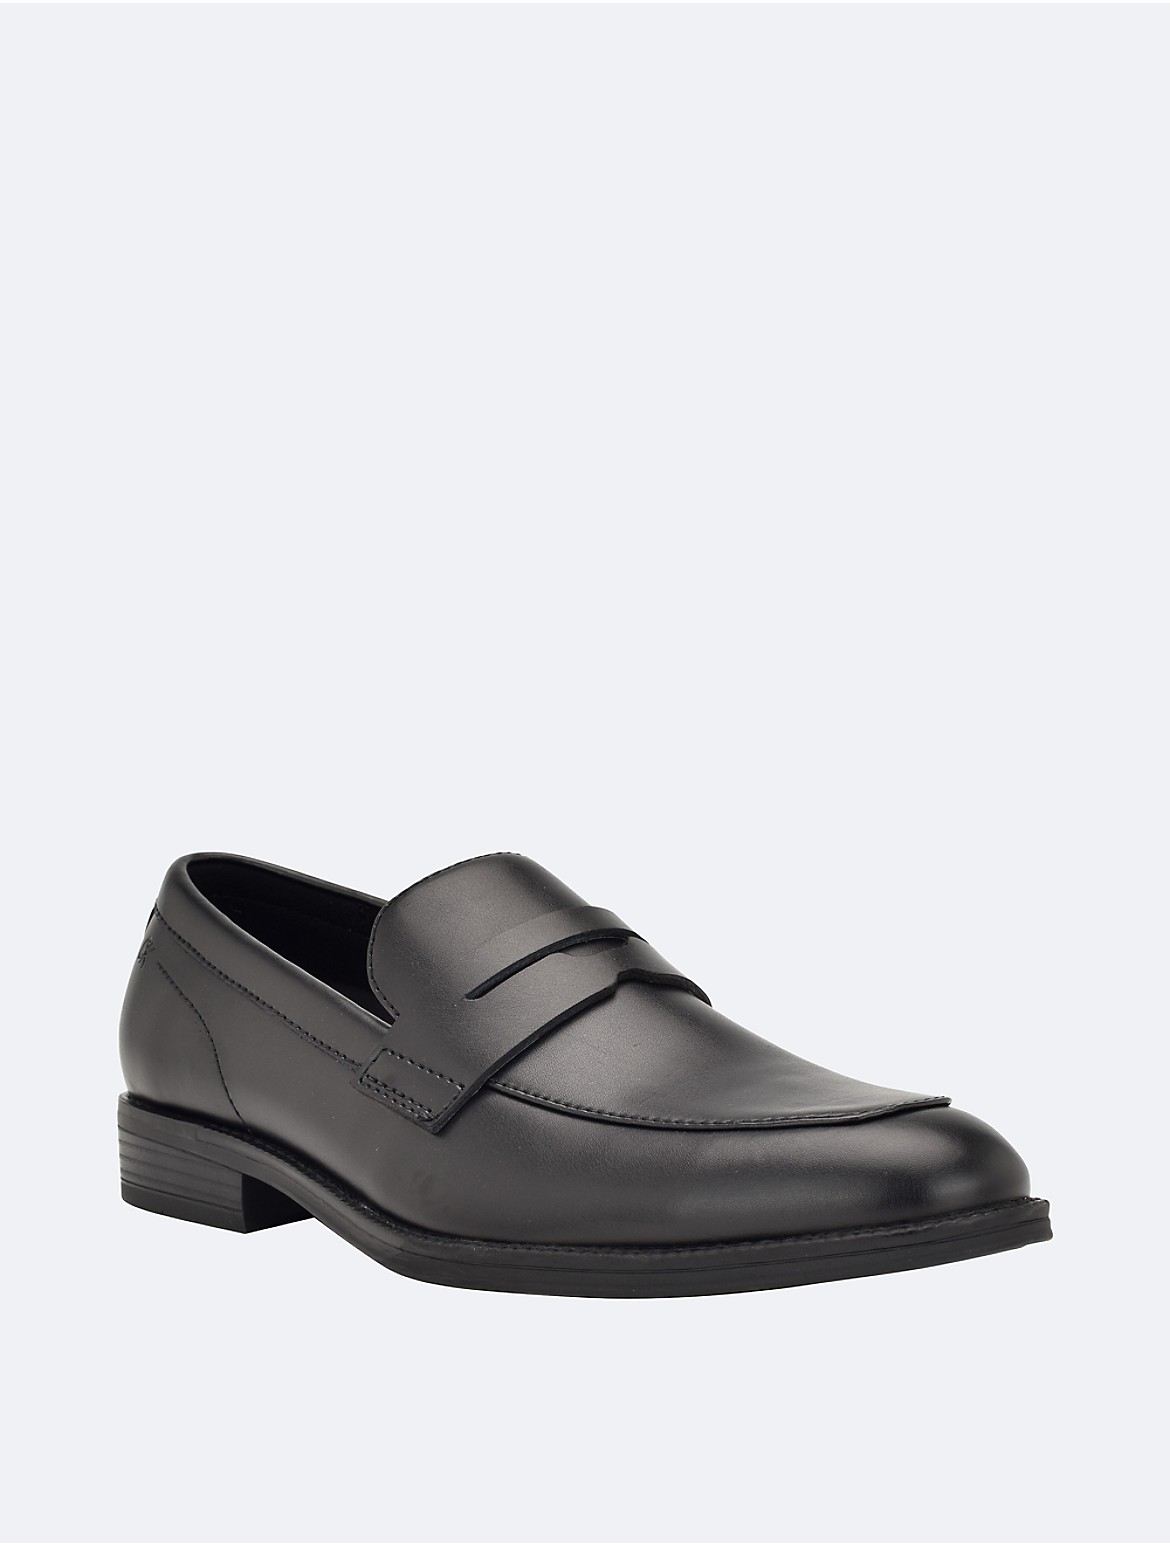 Calvin Klein Men's Men's Jay Dress Shoe - Black - 7